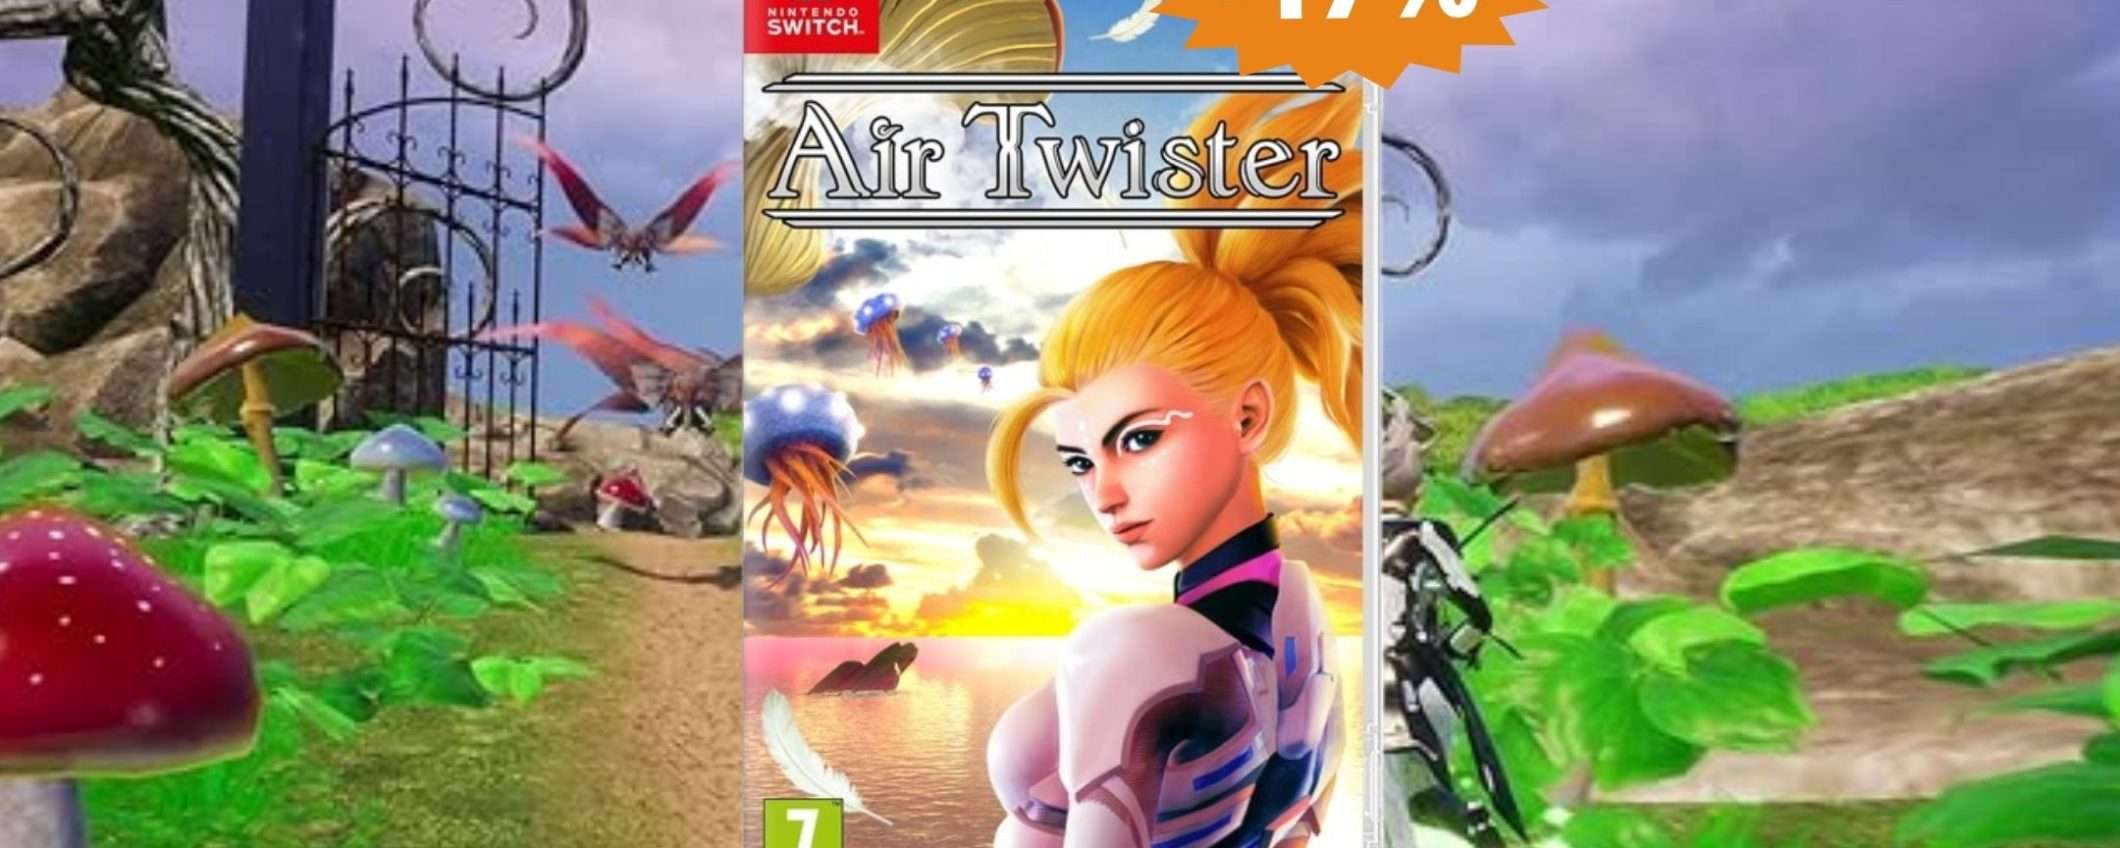 Air Twister per Nintendo Switch: OFFERTA esclusiva Amazon